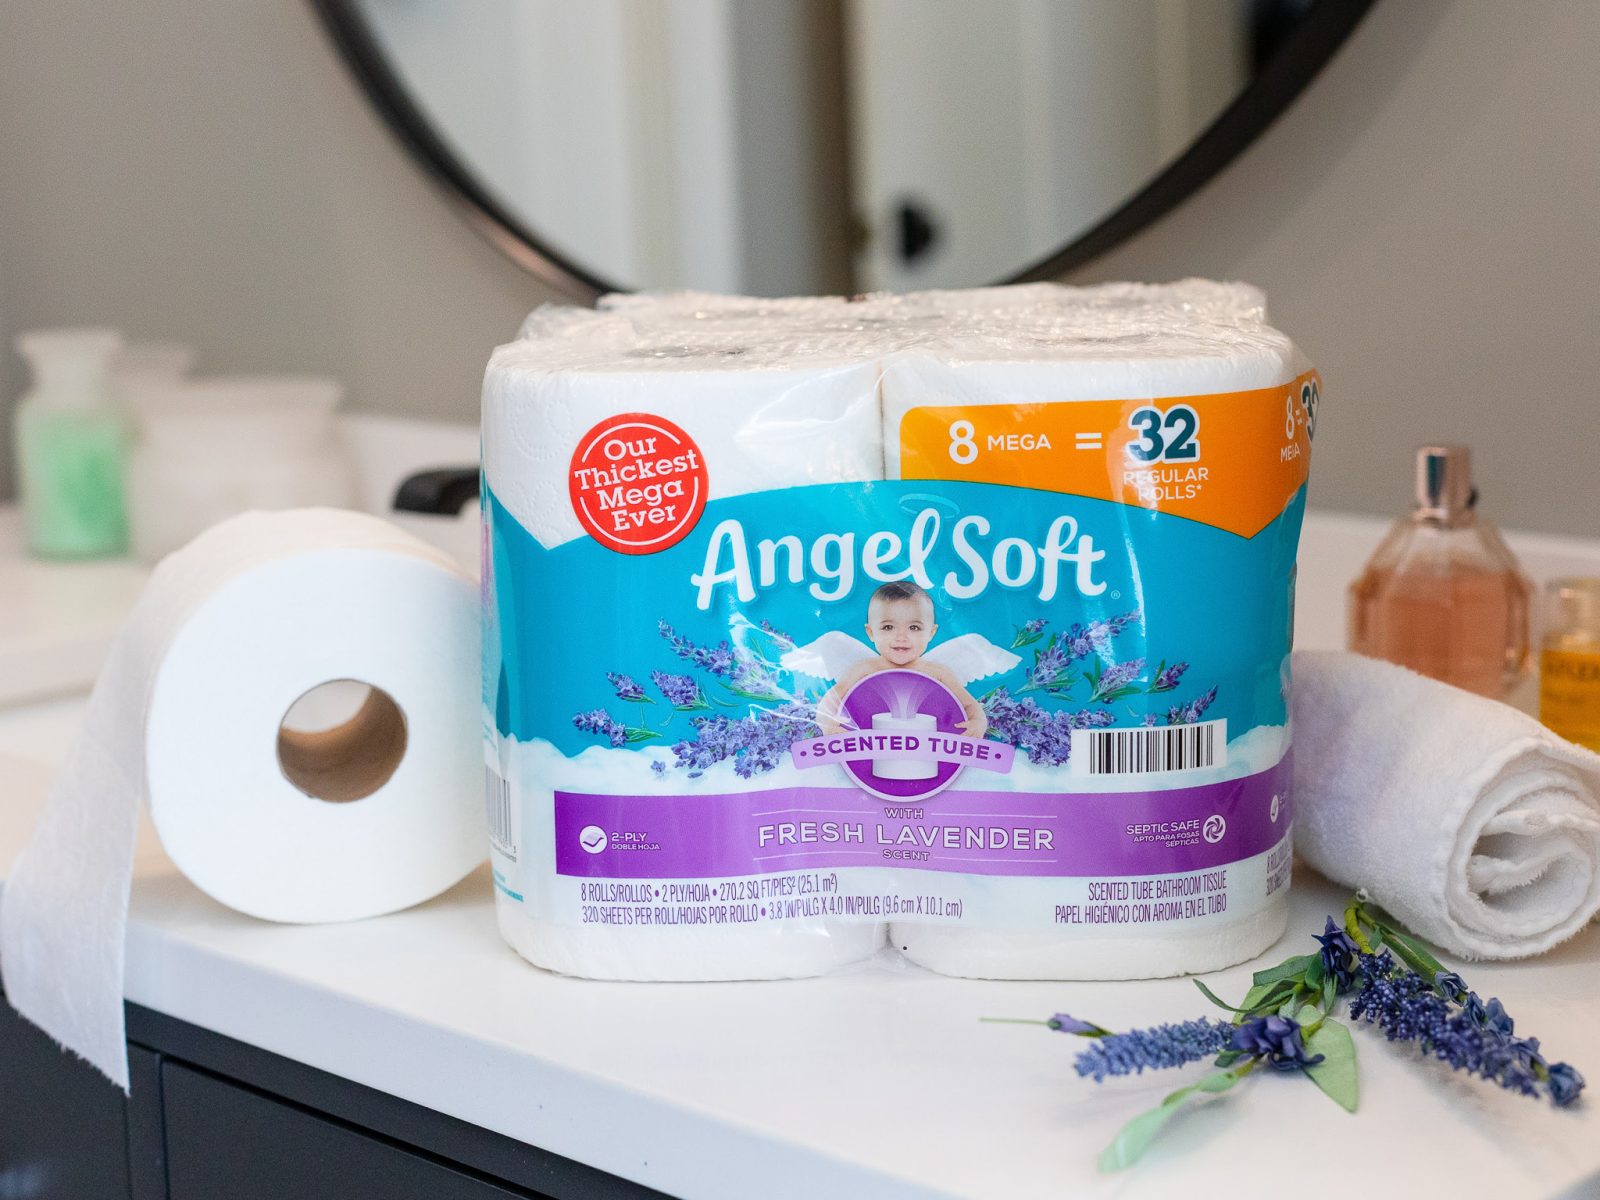 Angel Soft Bath Tissue As Low As $4.99 At Kroger (Regular Price $7.99)